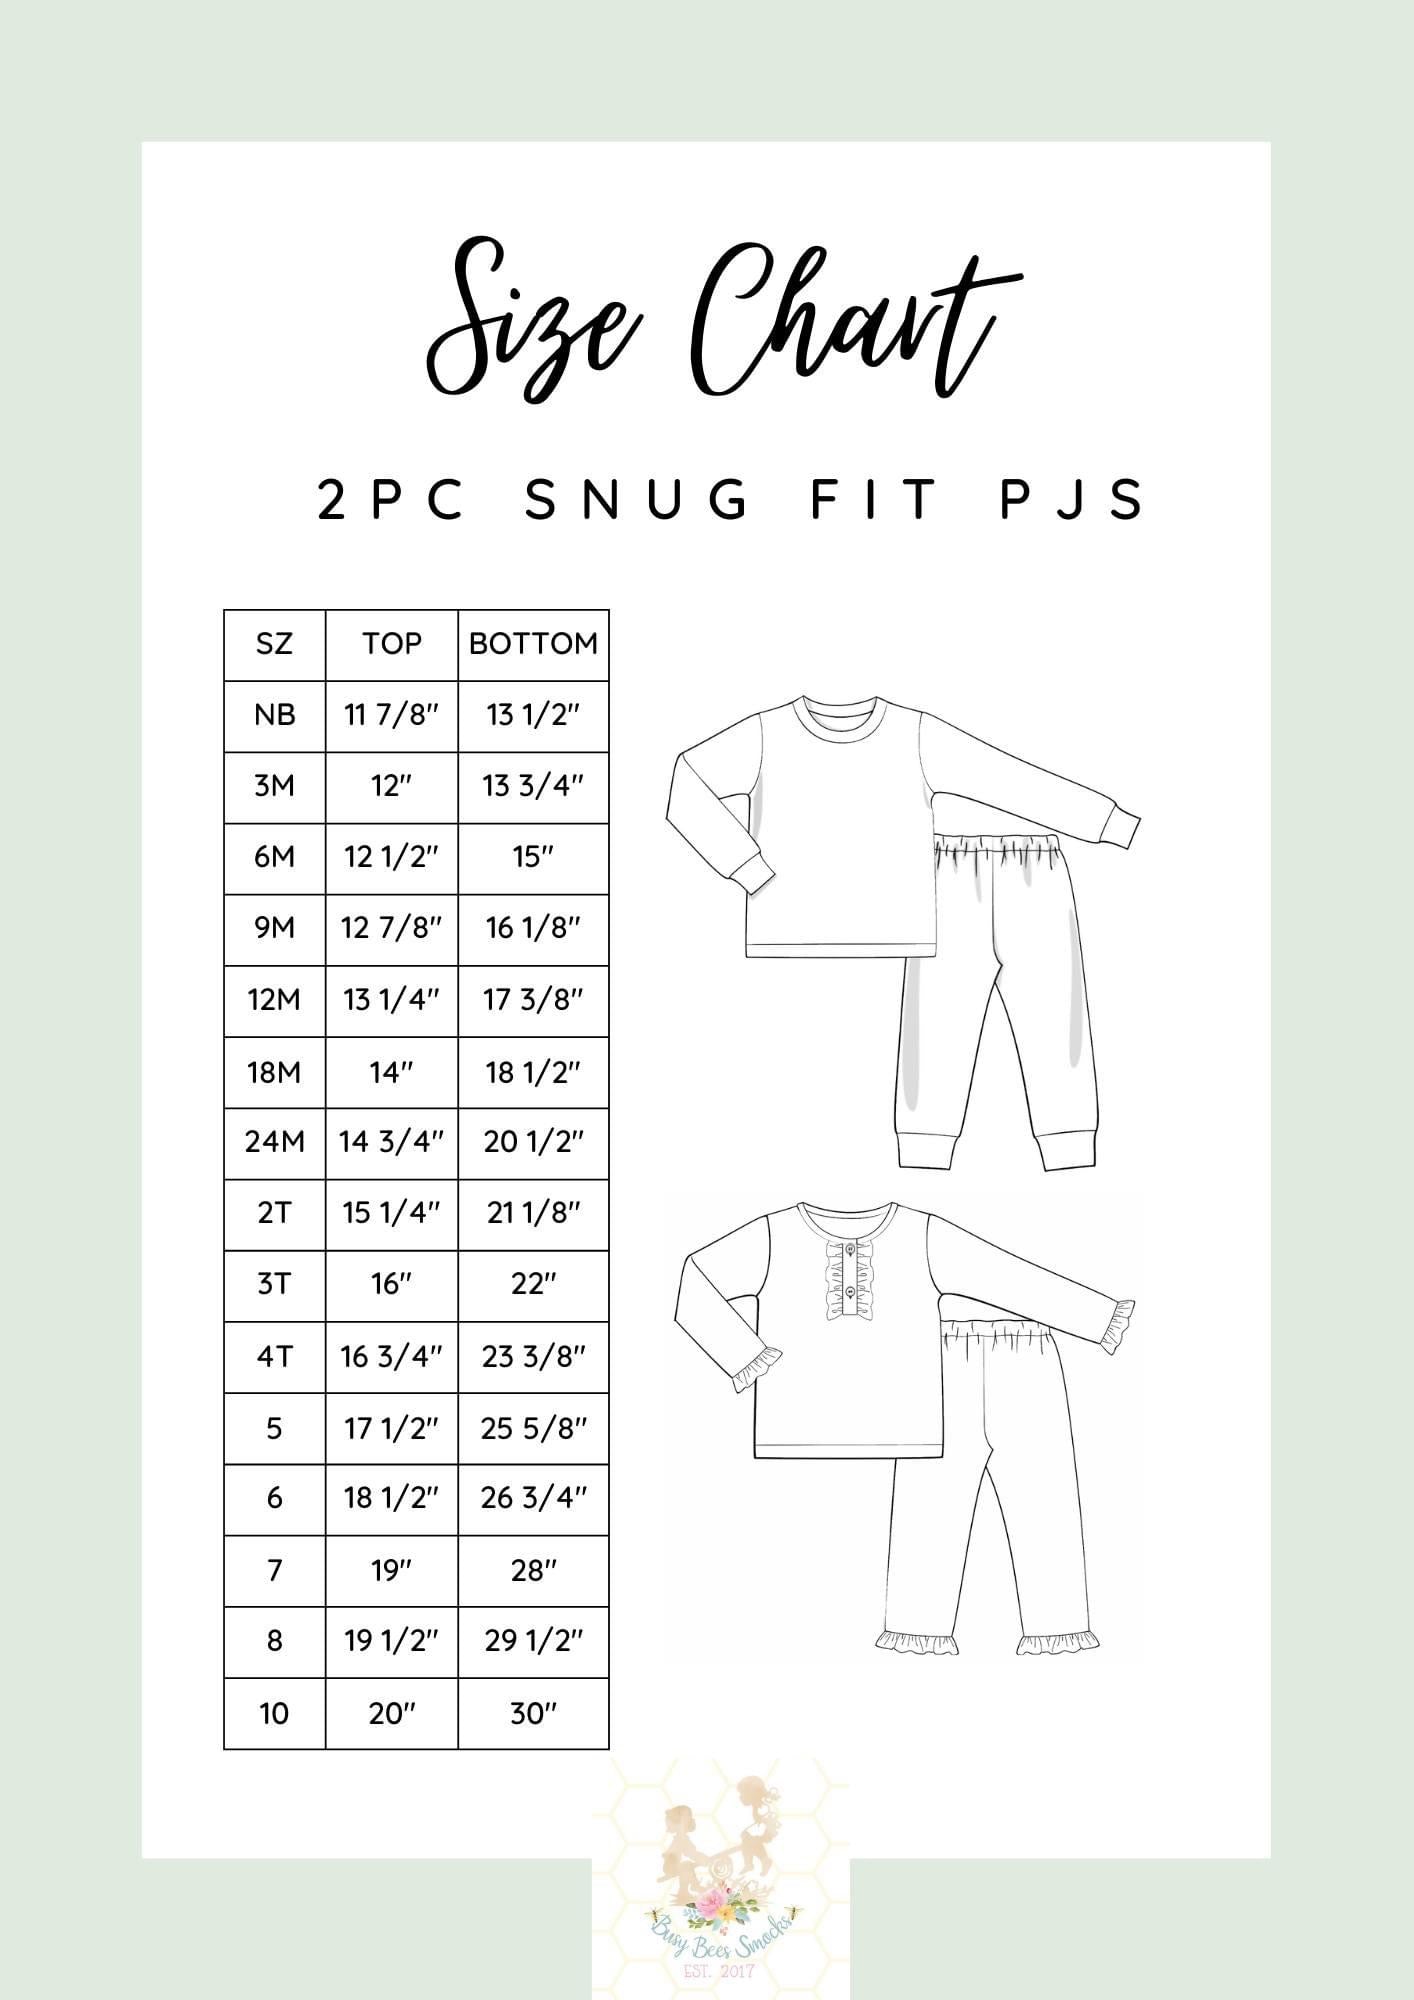 Snug Fit Pajama Size Chart